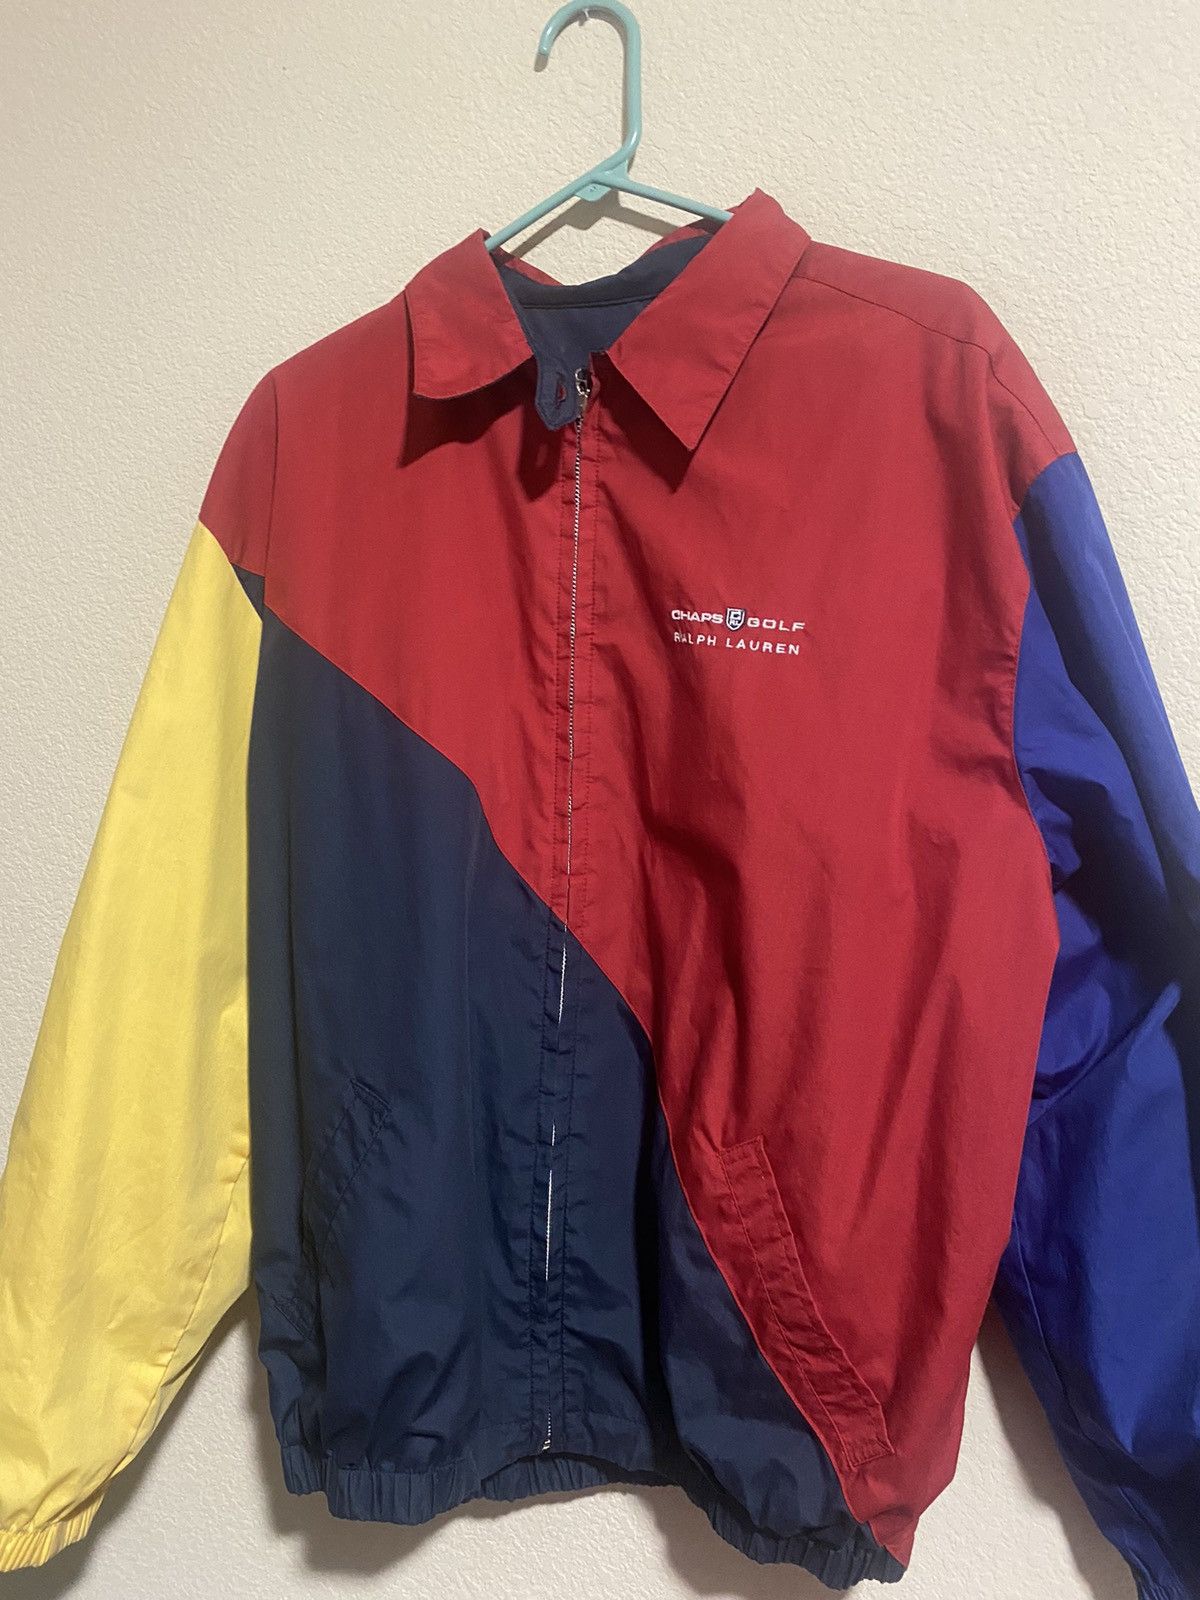 Vintage 90s Chaps Ralph Lauren Red Zip Harrington Jacket Size Large 